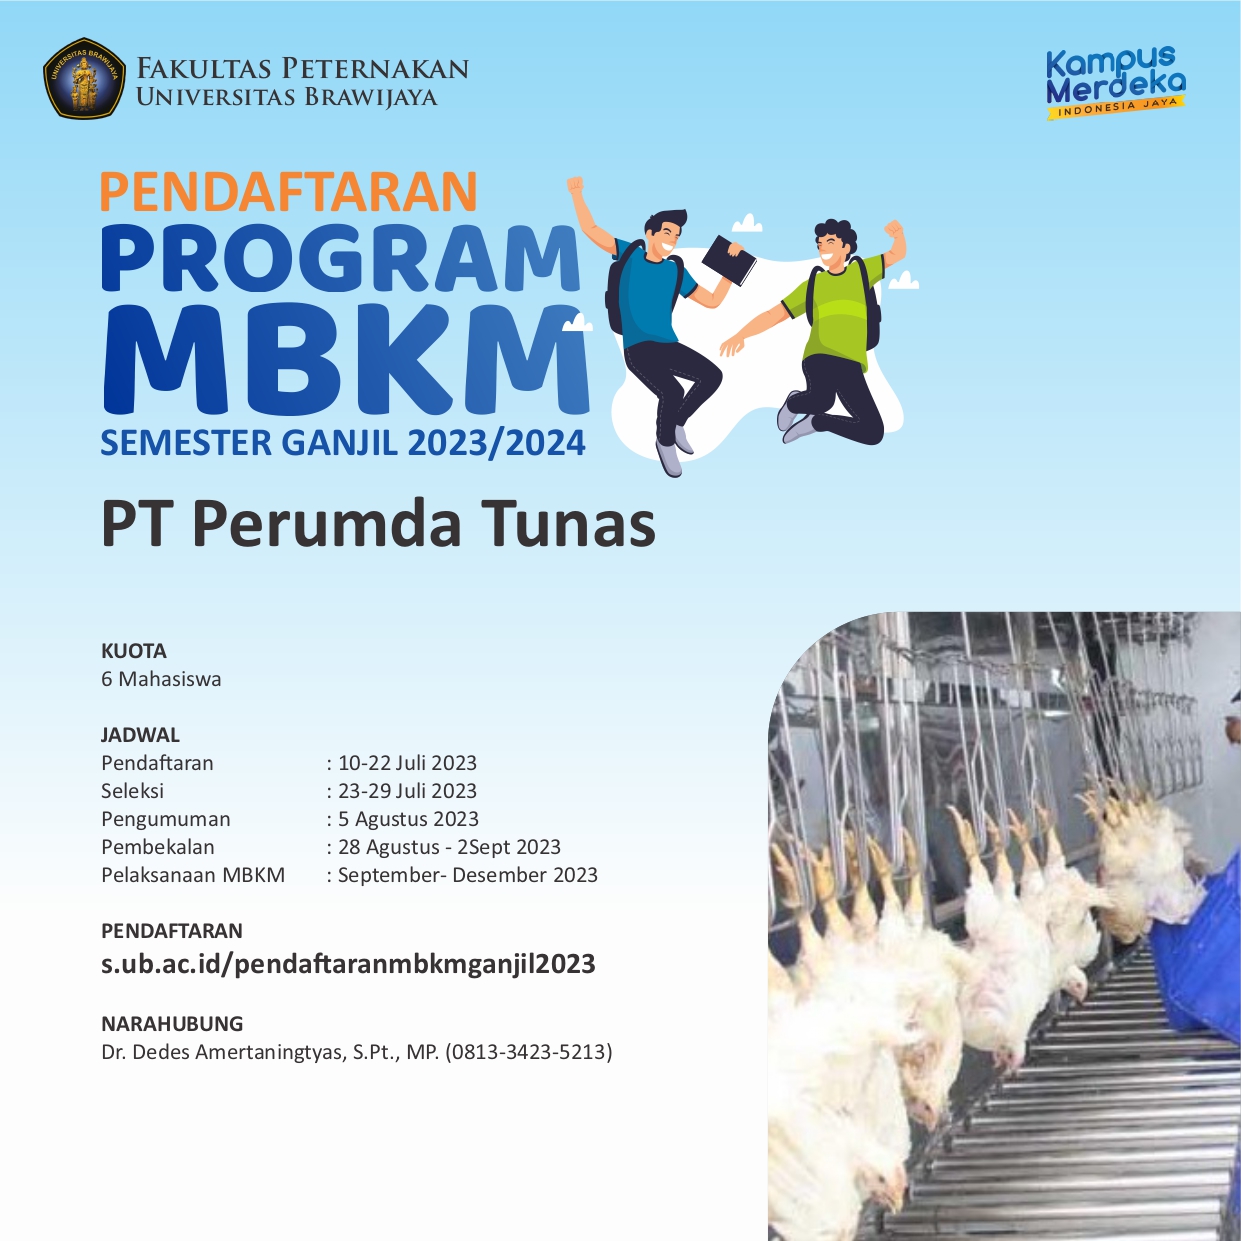 Registration of MBKM Perumda Tunas